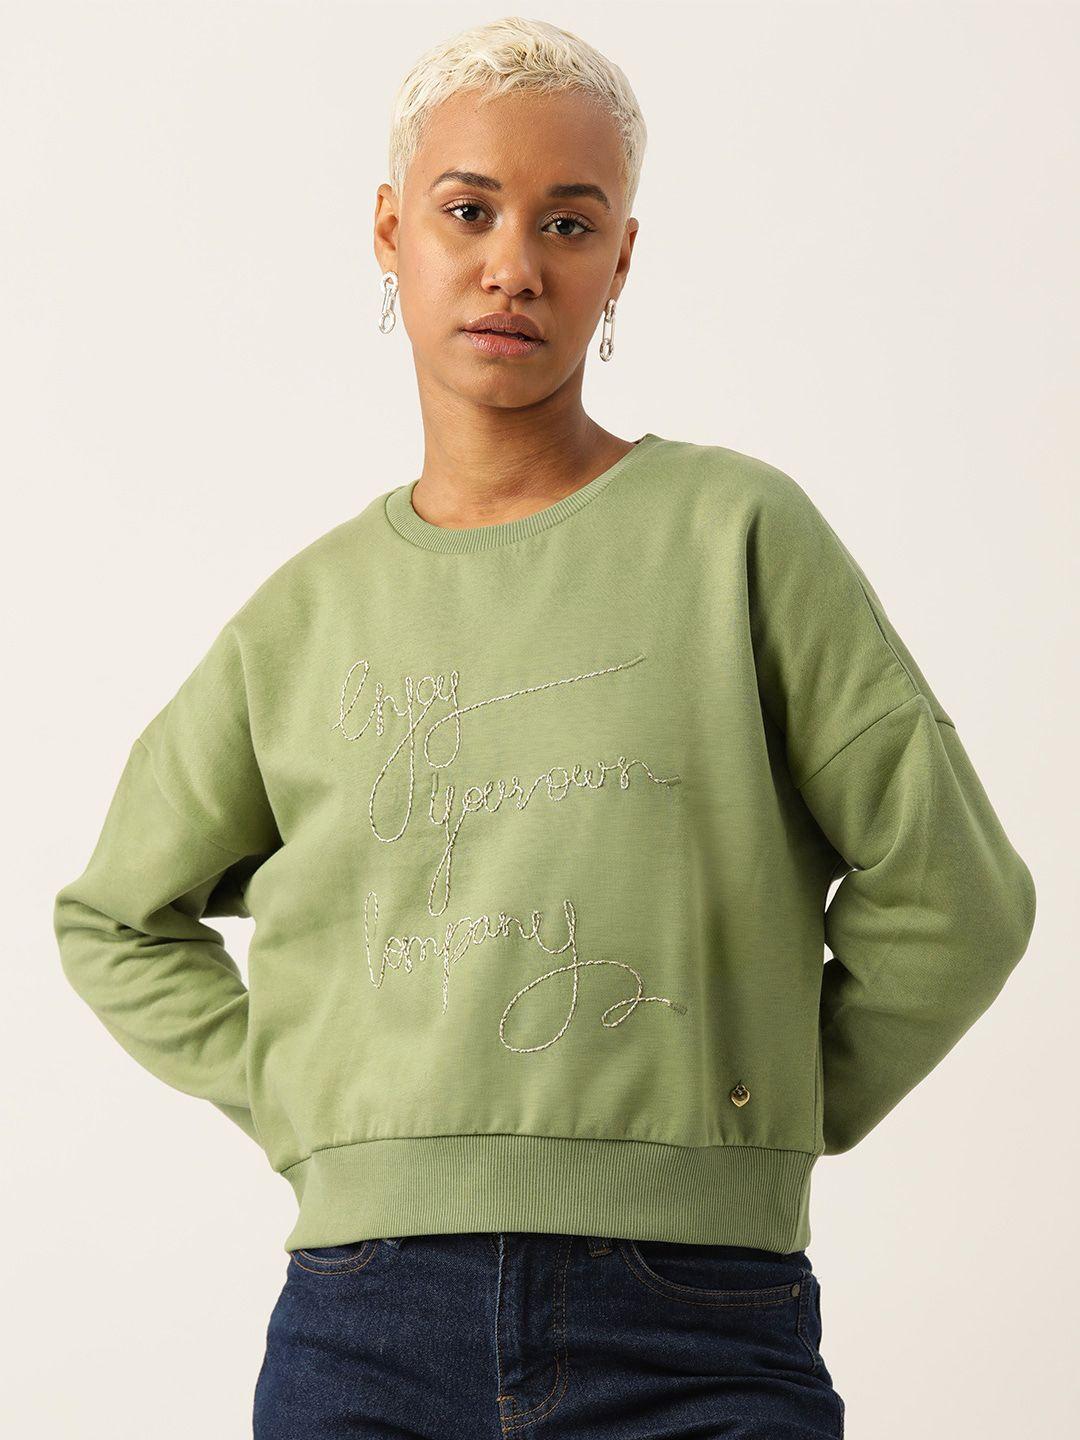 monte-carlo-embroidered-sweatshirt